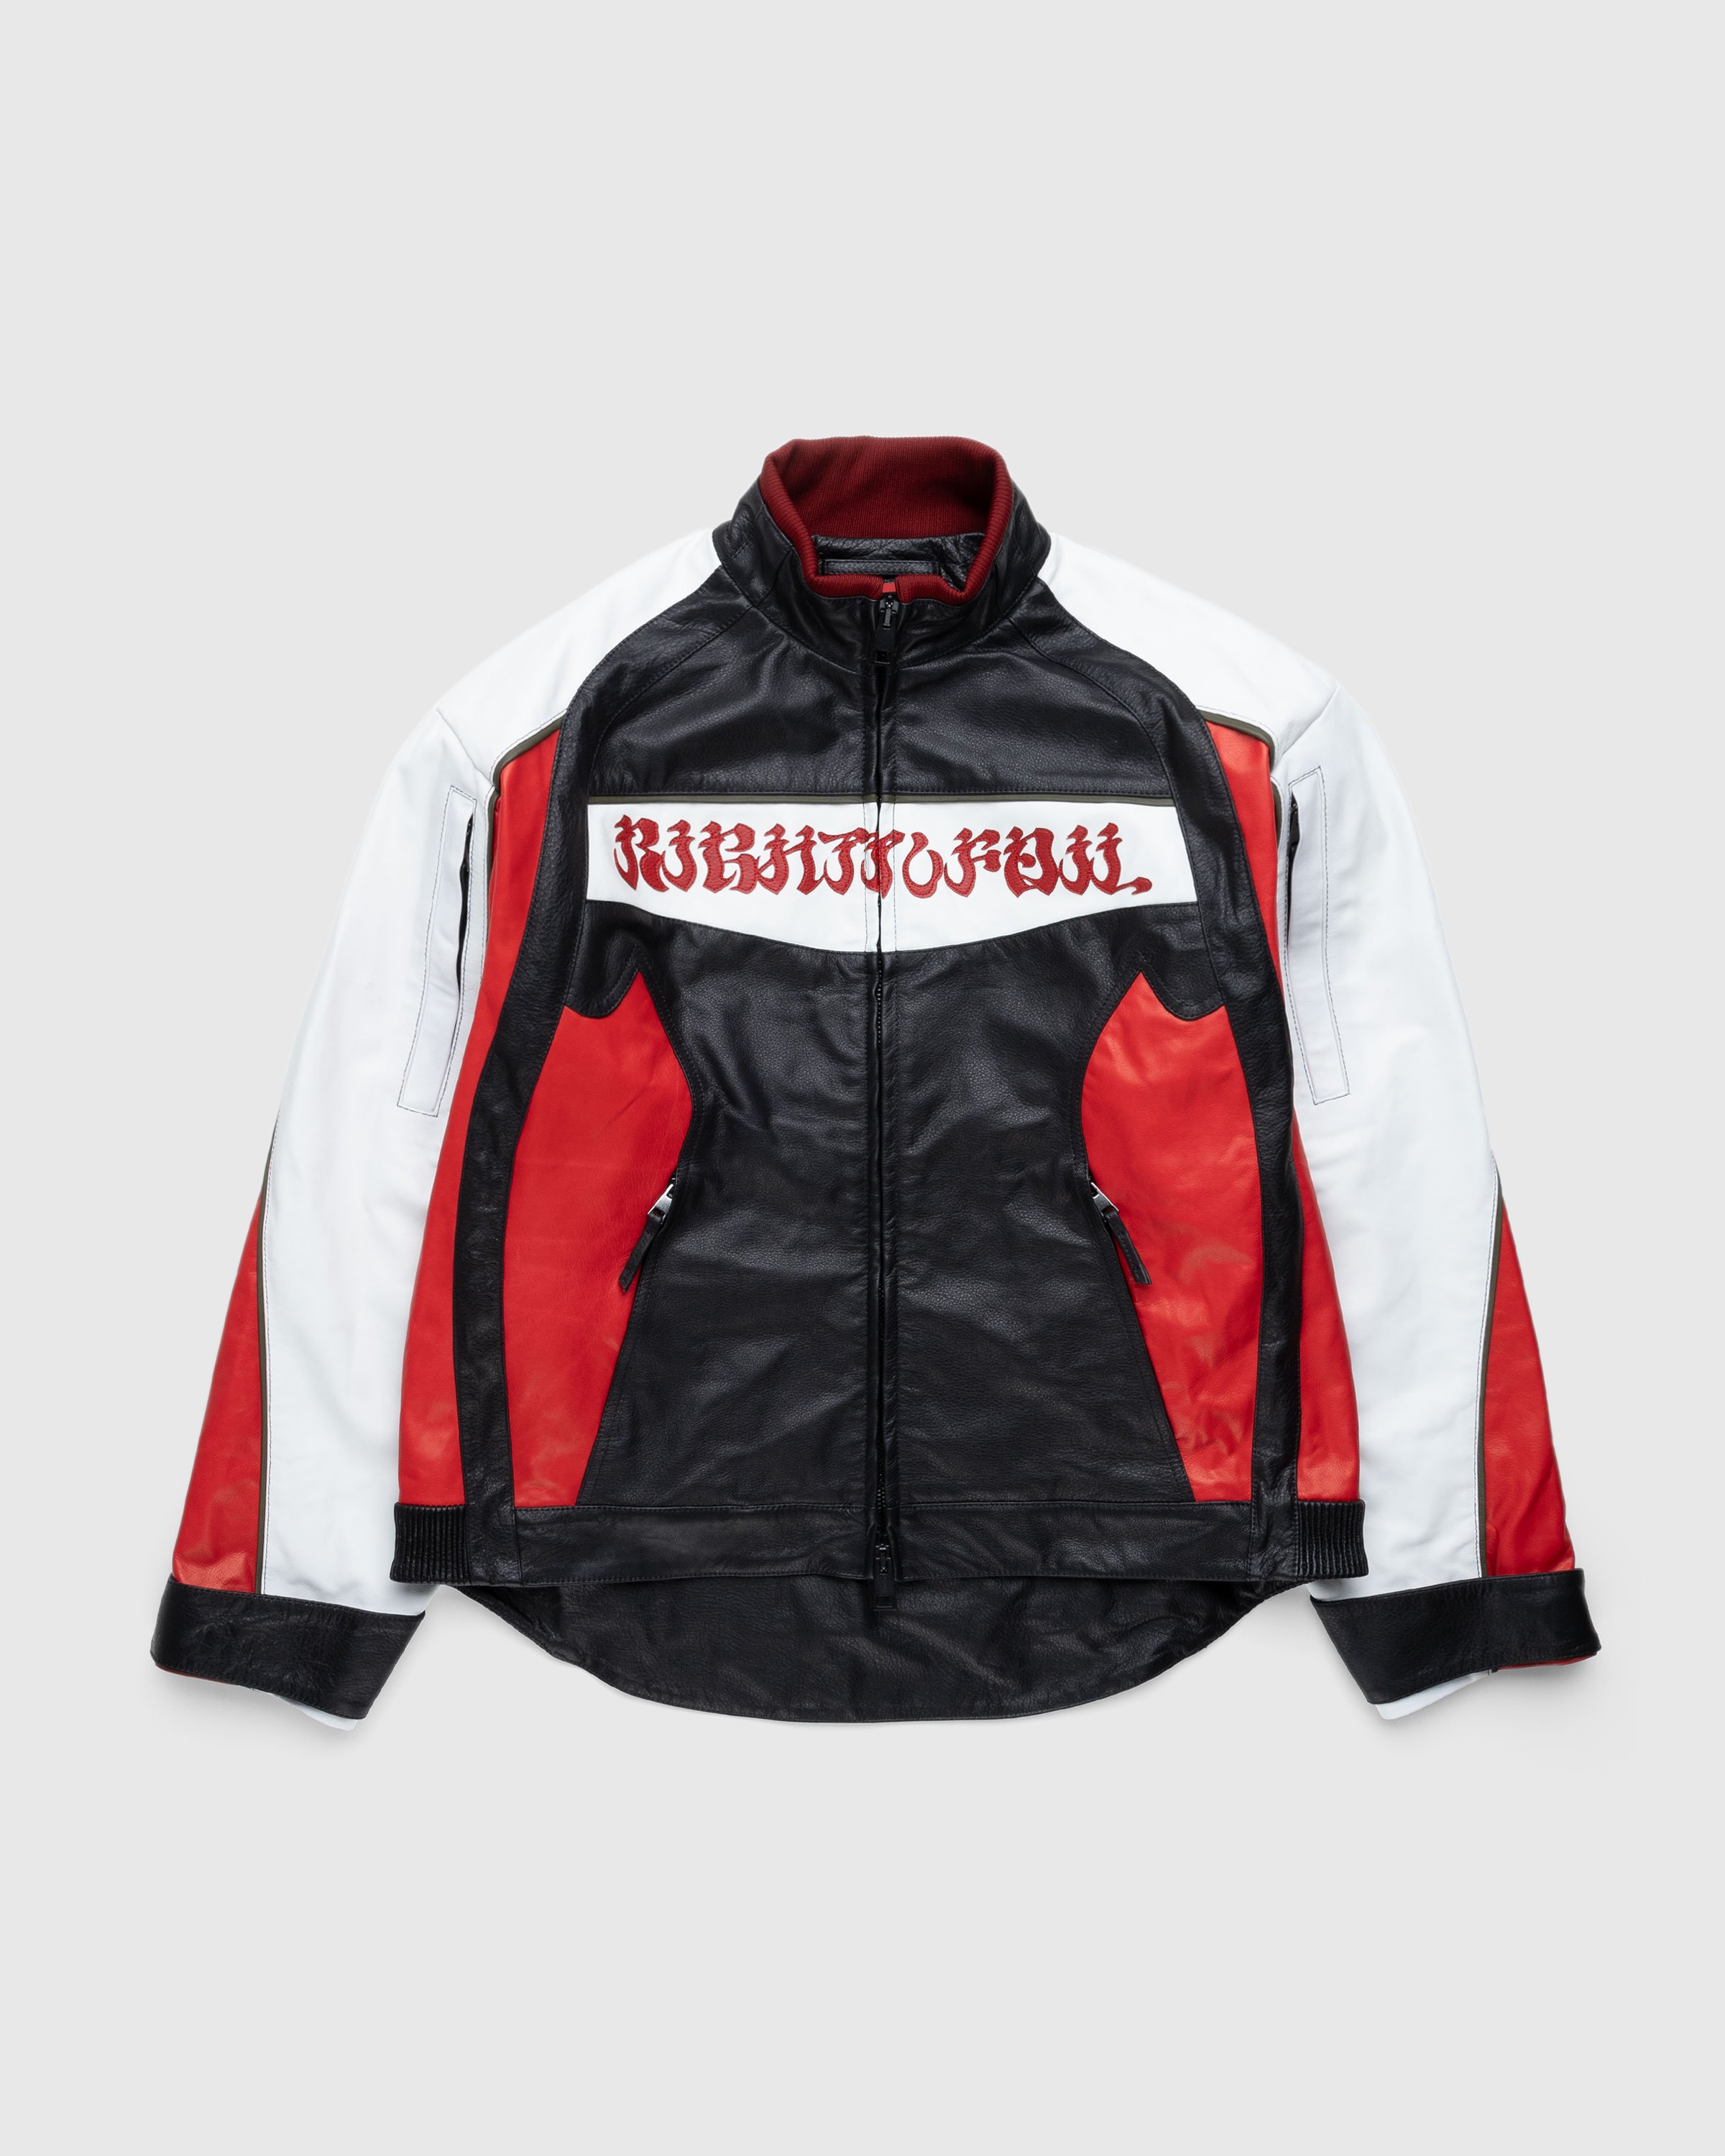 KUSIKOHC – Spidi Rider Jacket Red